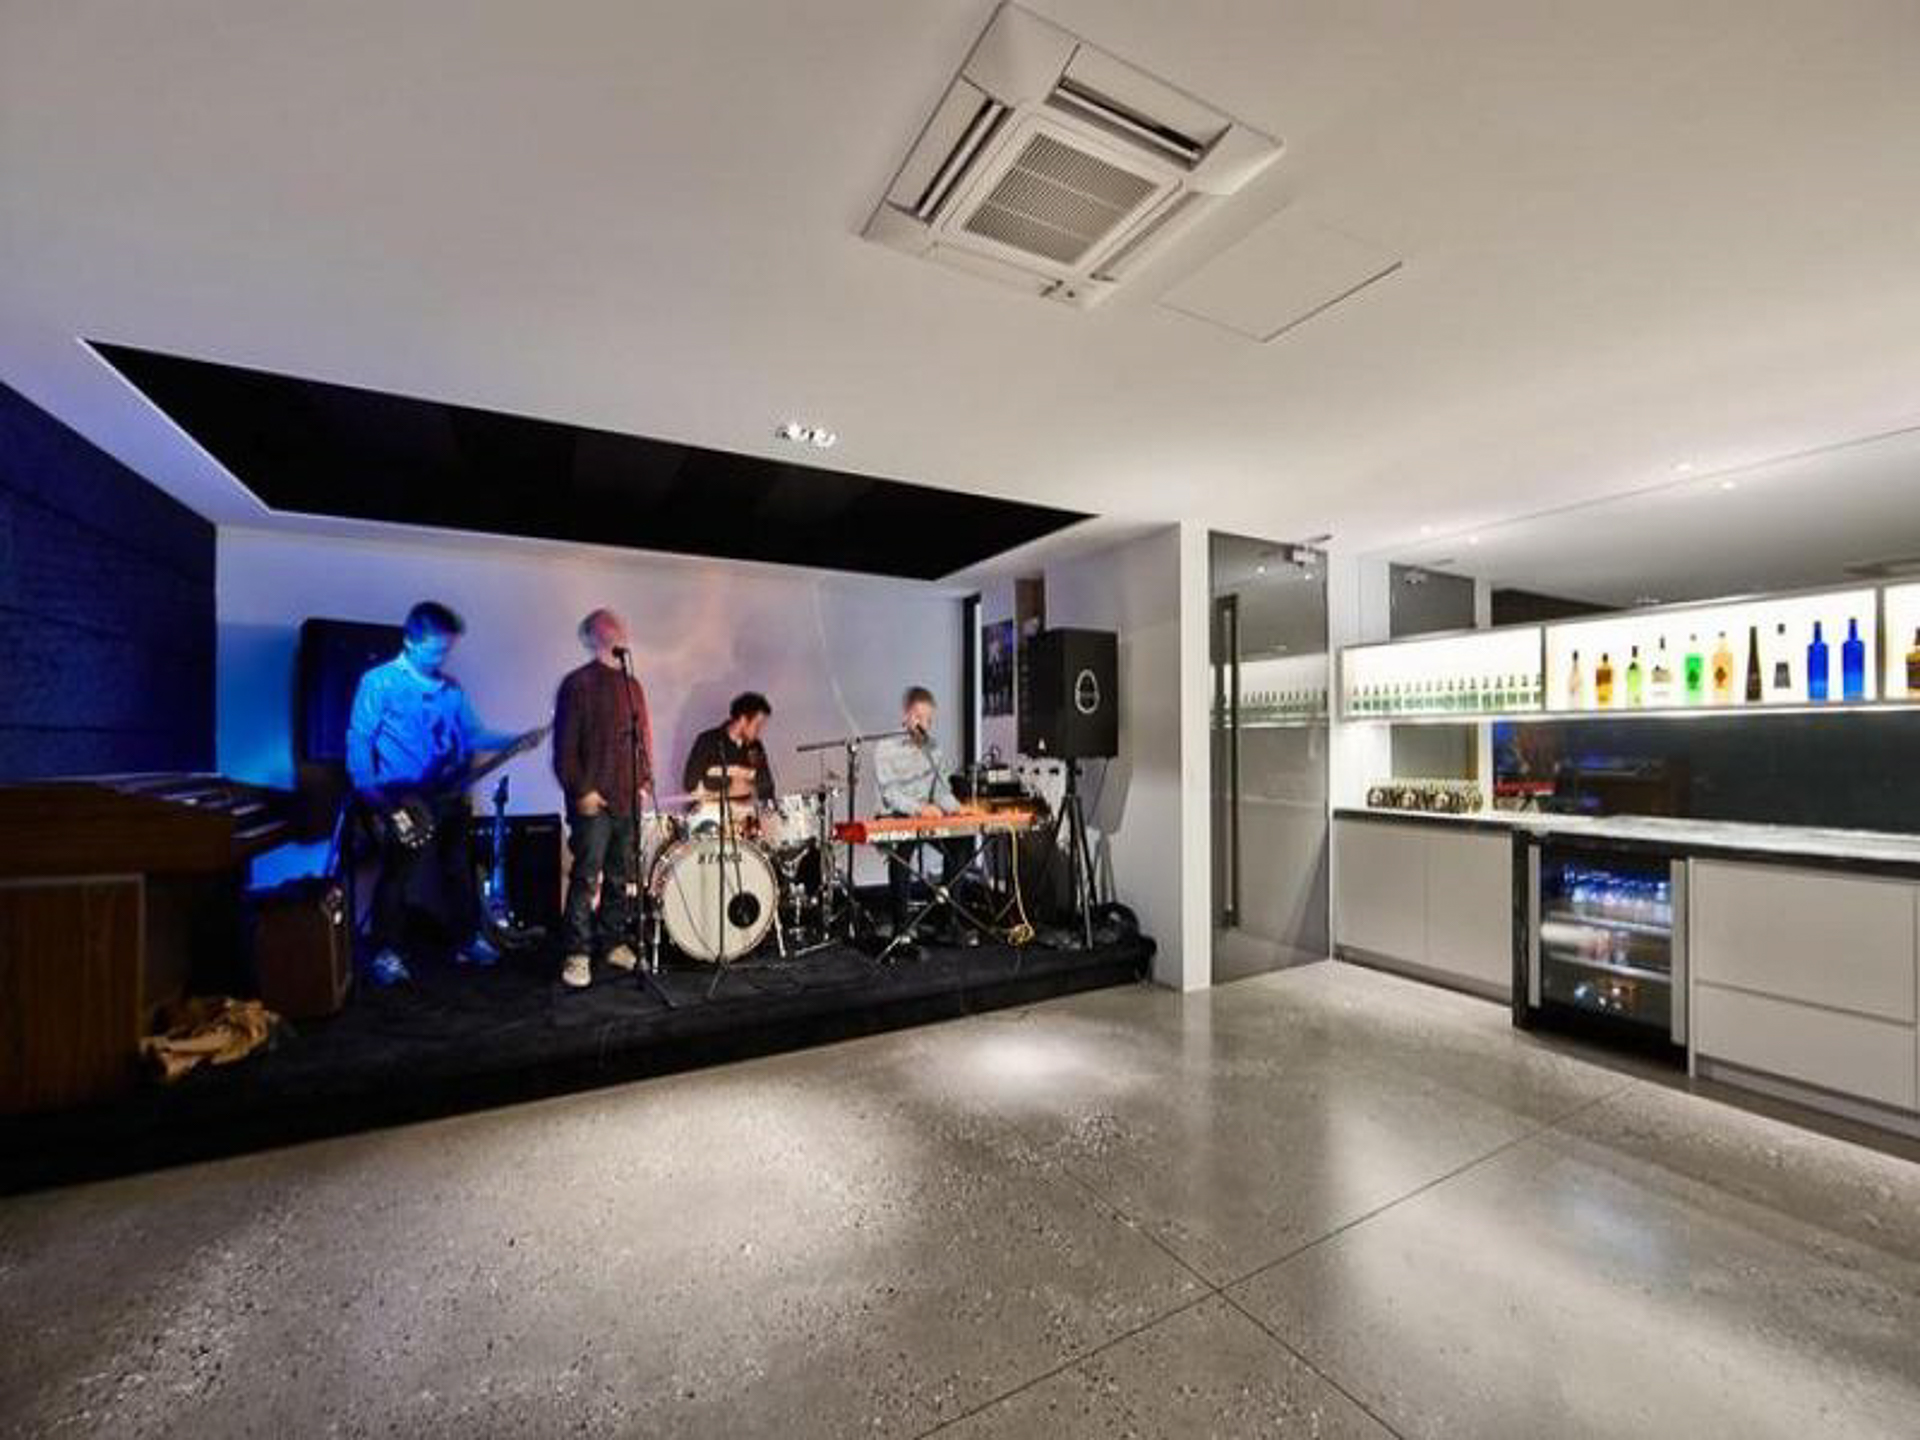 luxury garage band room, home recording studio, bar, drinks bar, luxury home, victoria, minka joinery